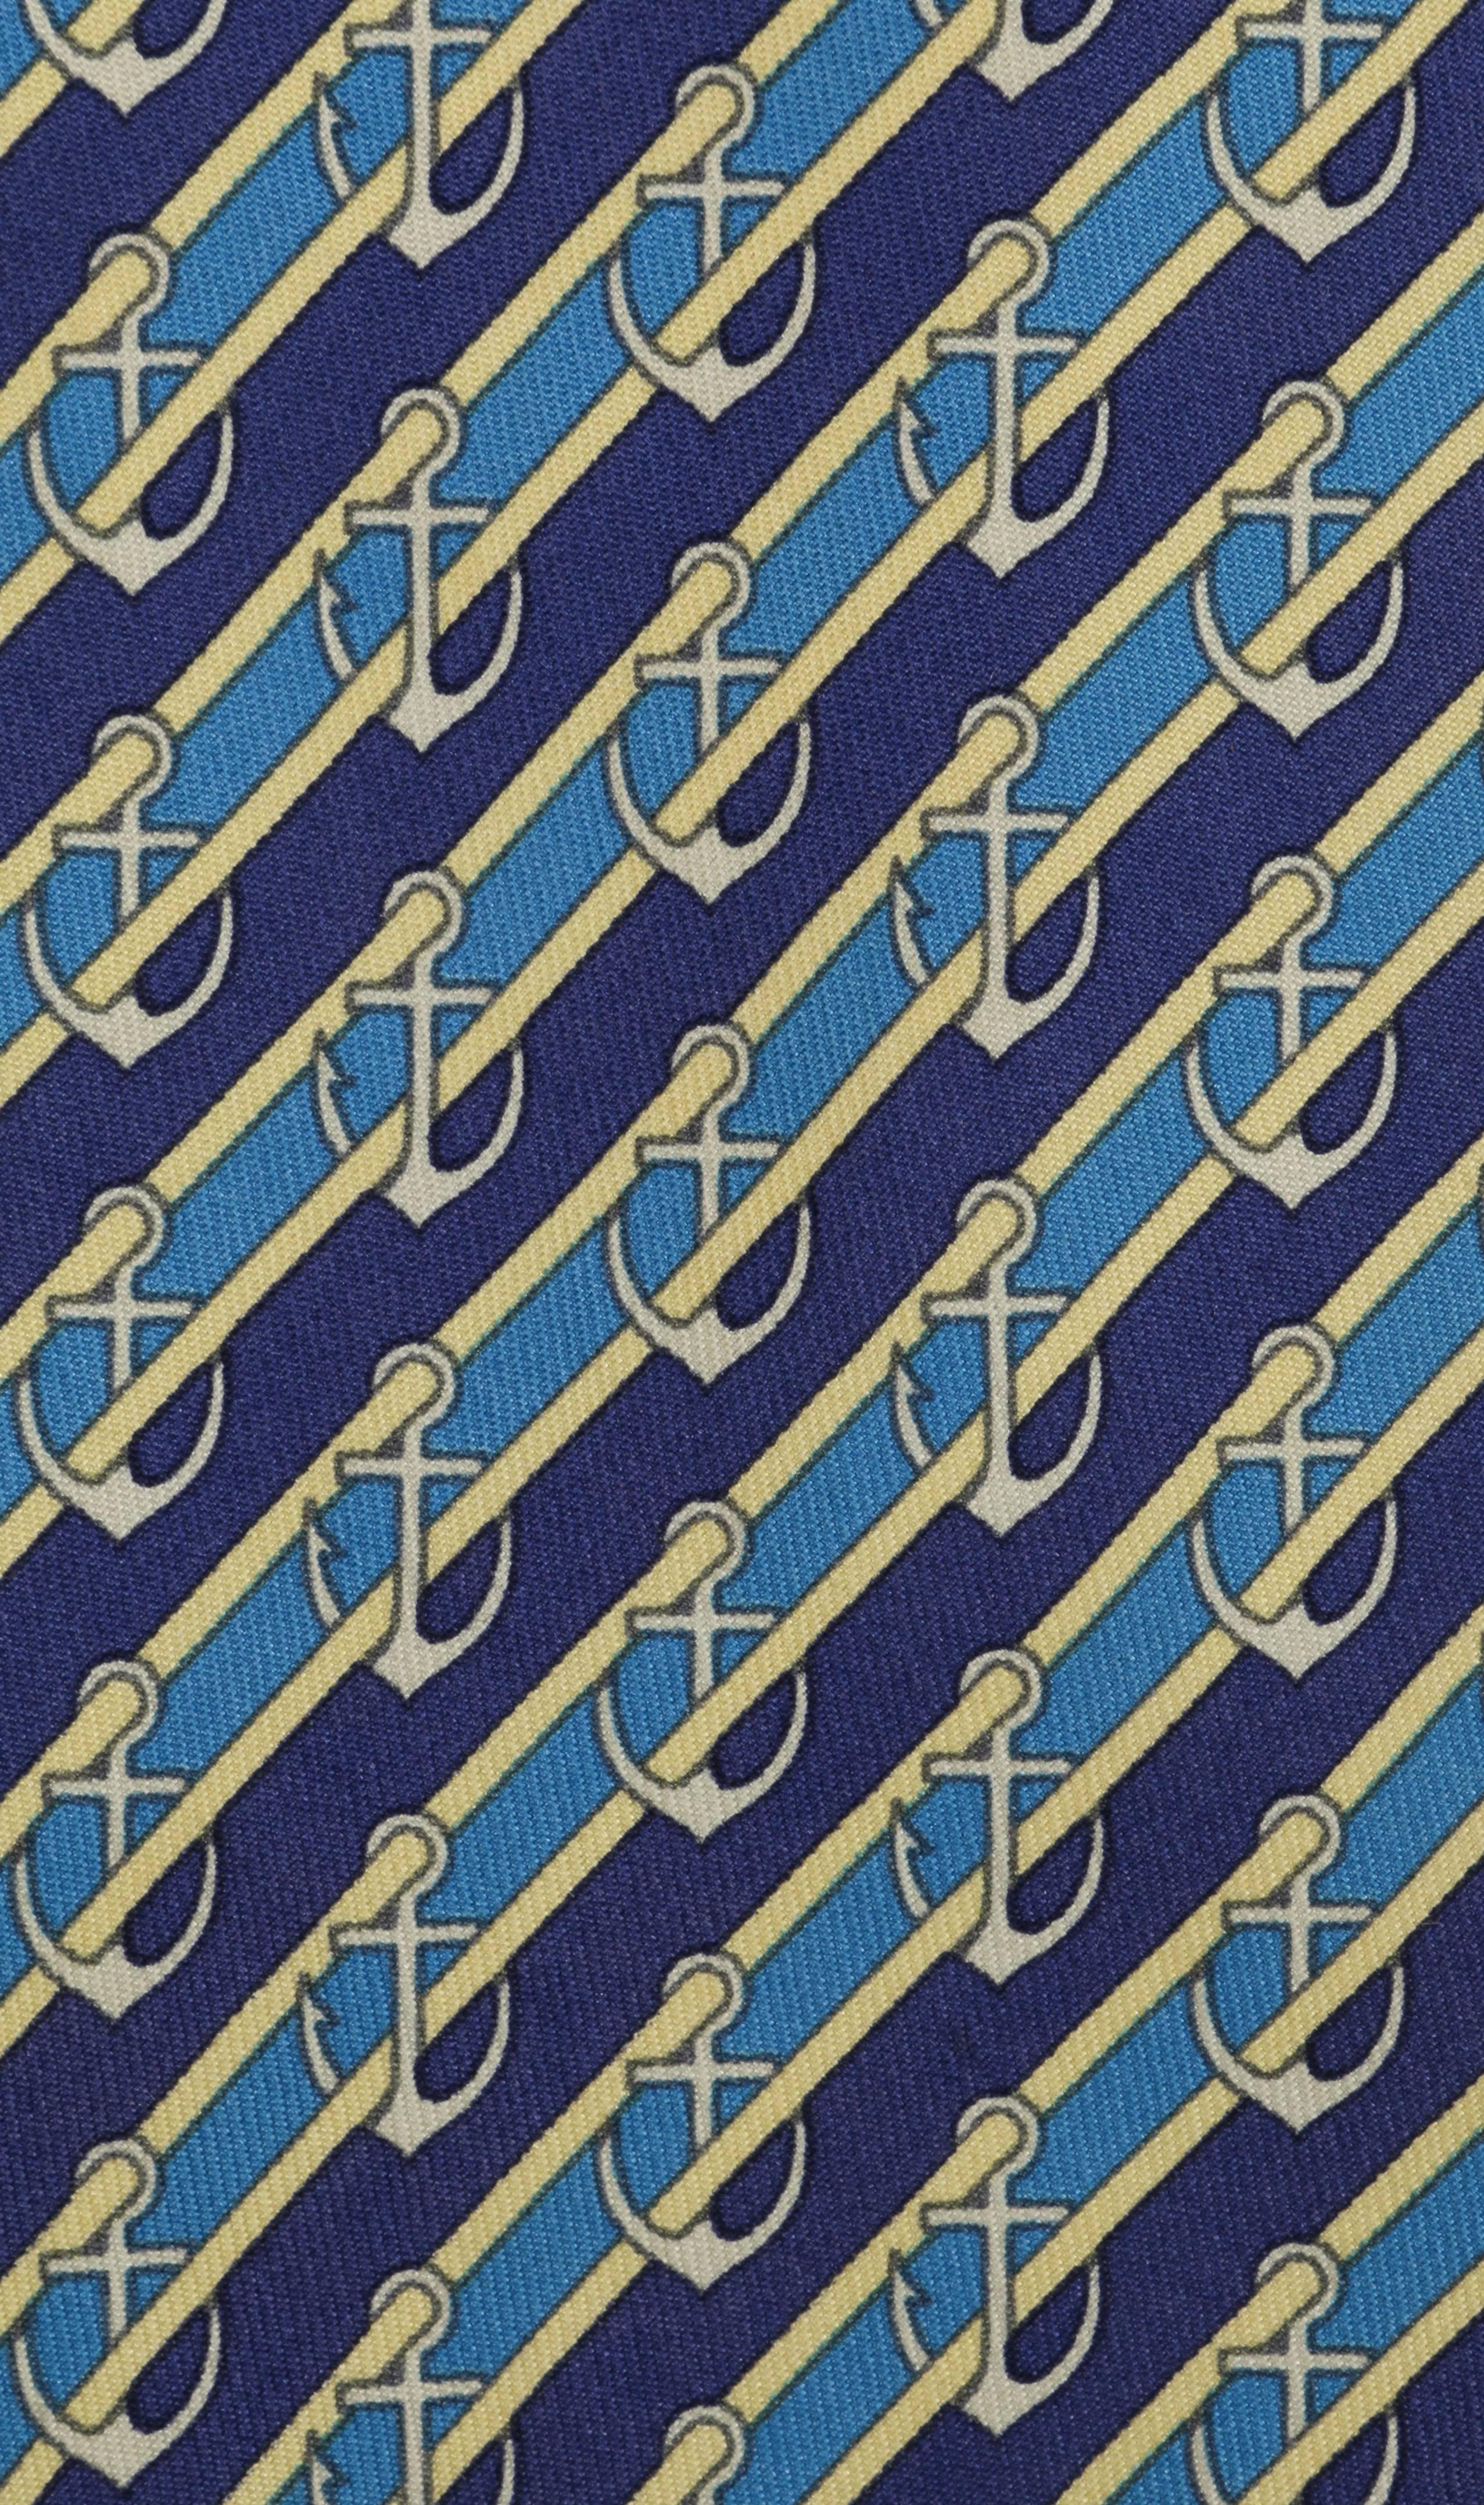 hermes anchor tie